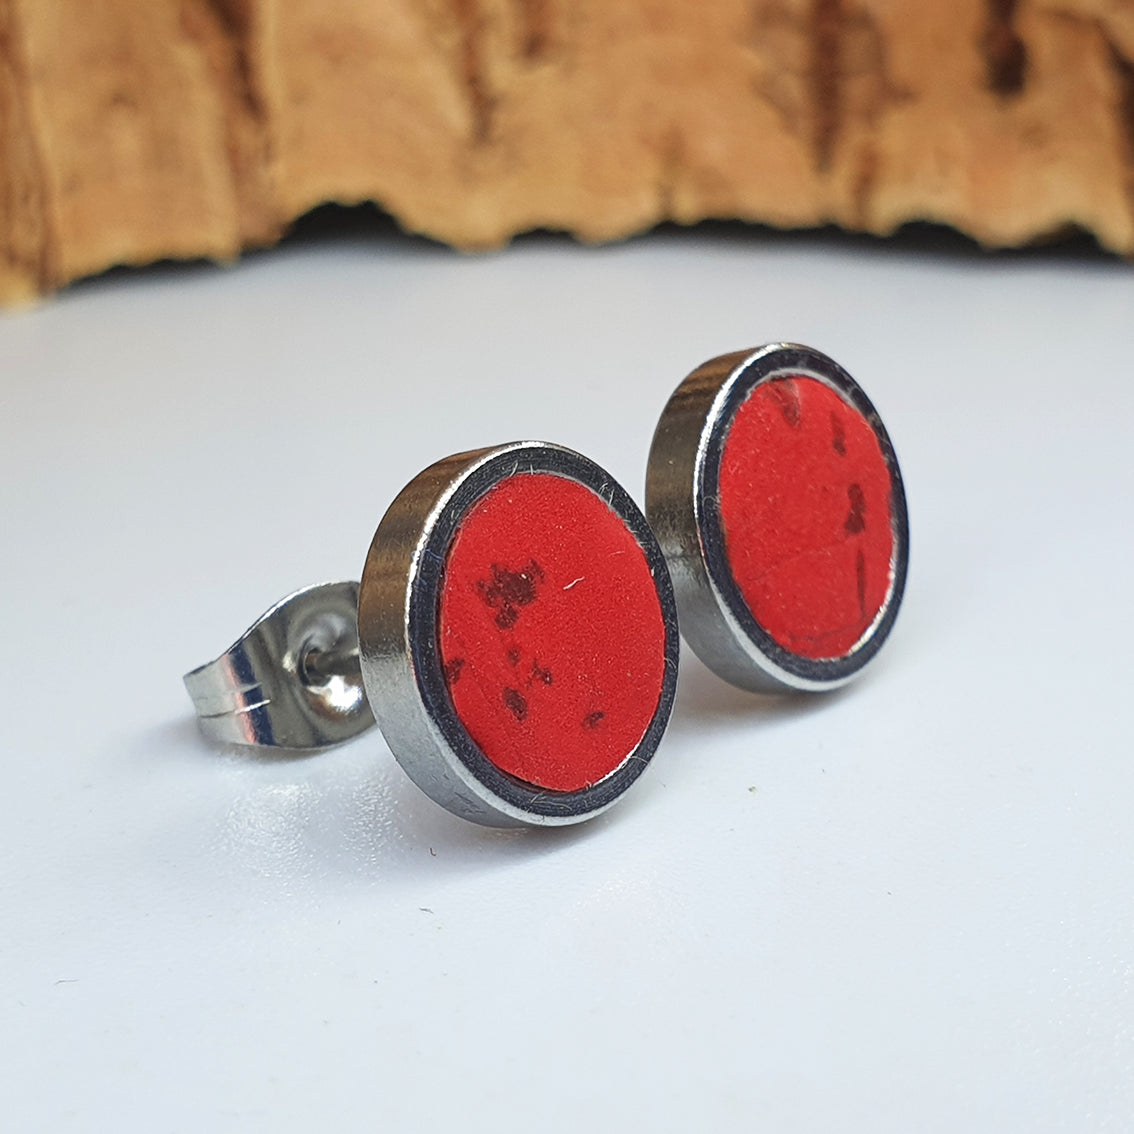 Fabrikk Cork Stud Earrings | Medium | Red | Vegan Leather